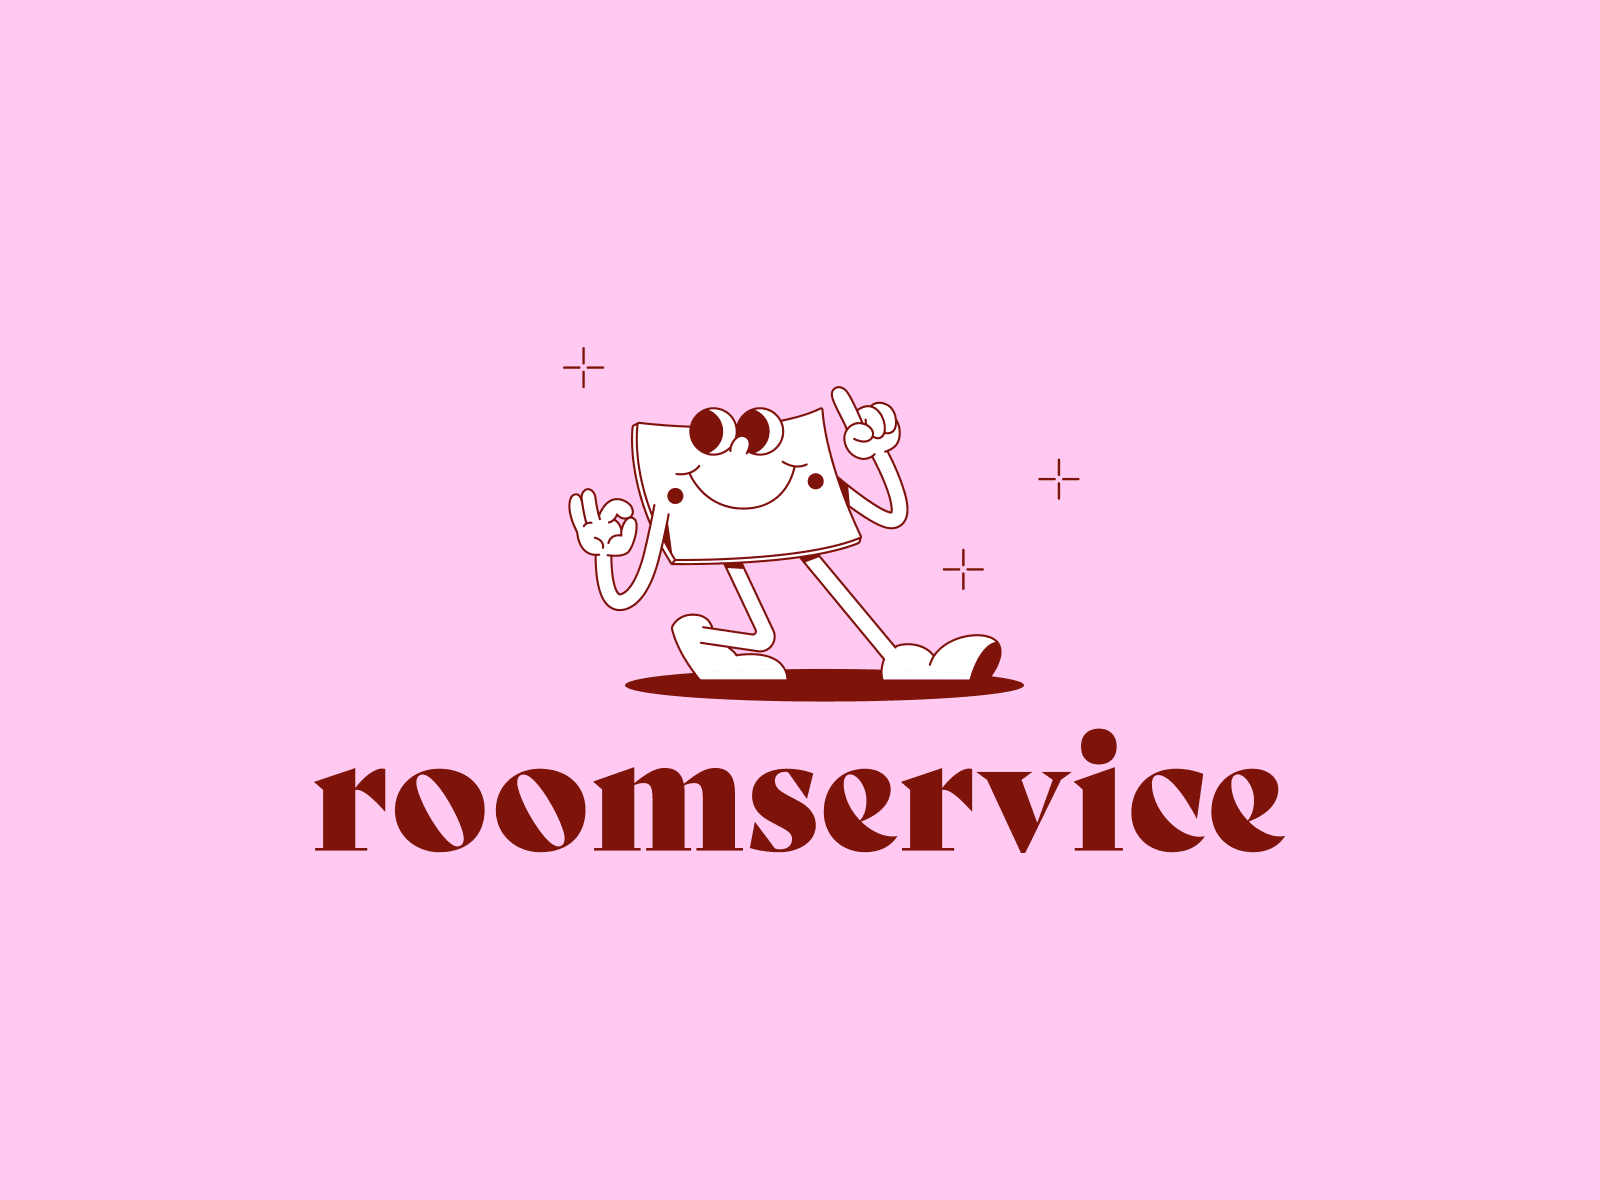 Roomservice logo fun